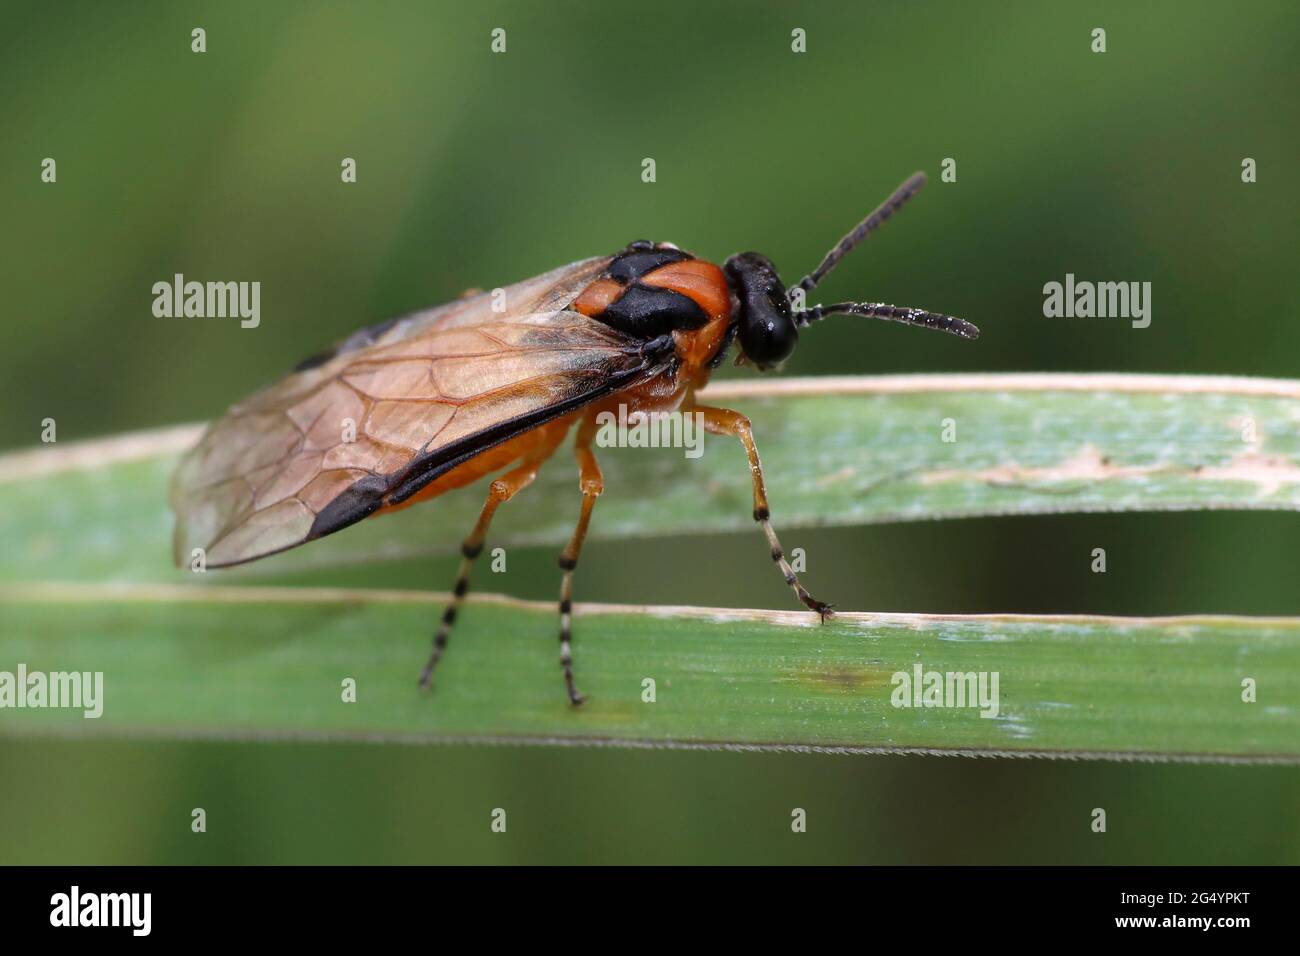 Turnip Sawfly (Athalia rosae) Stock Photo